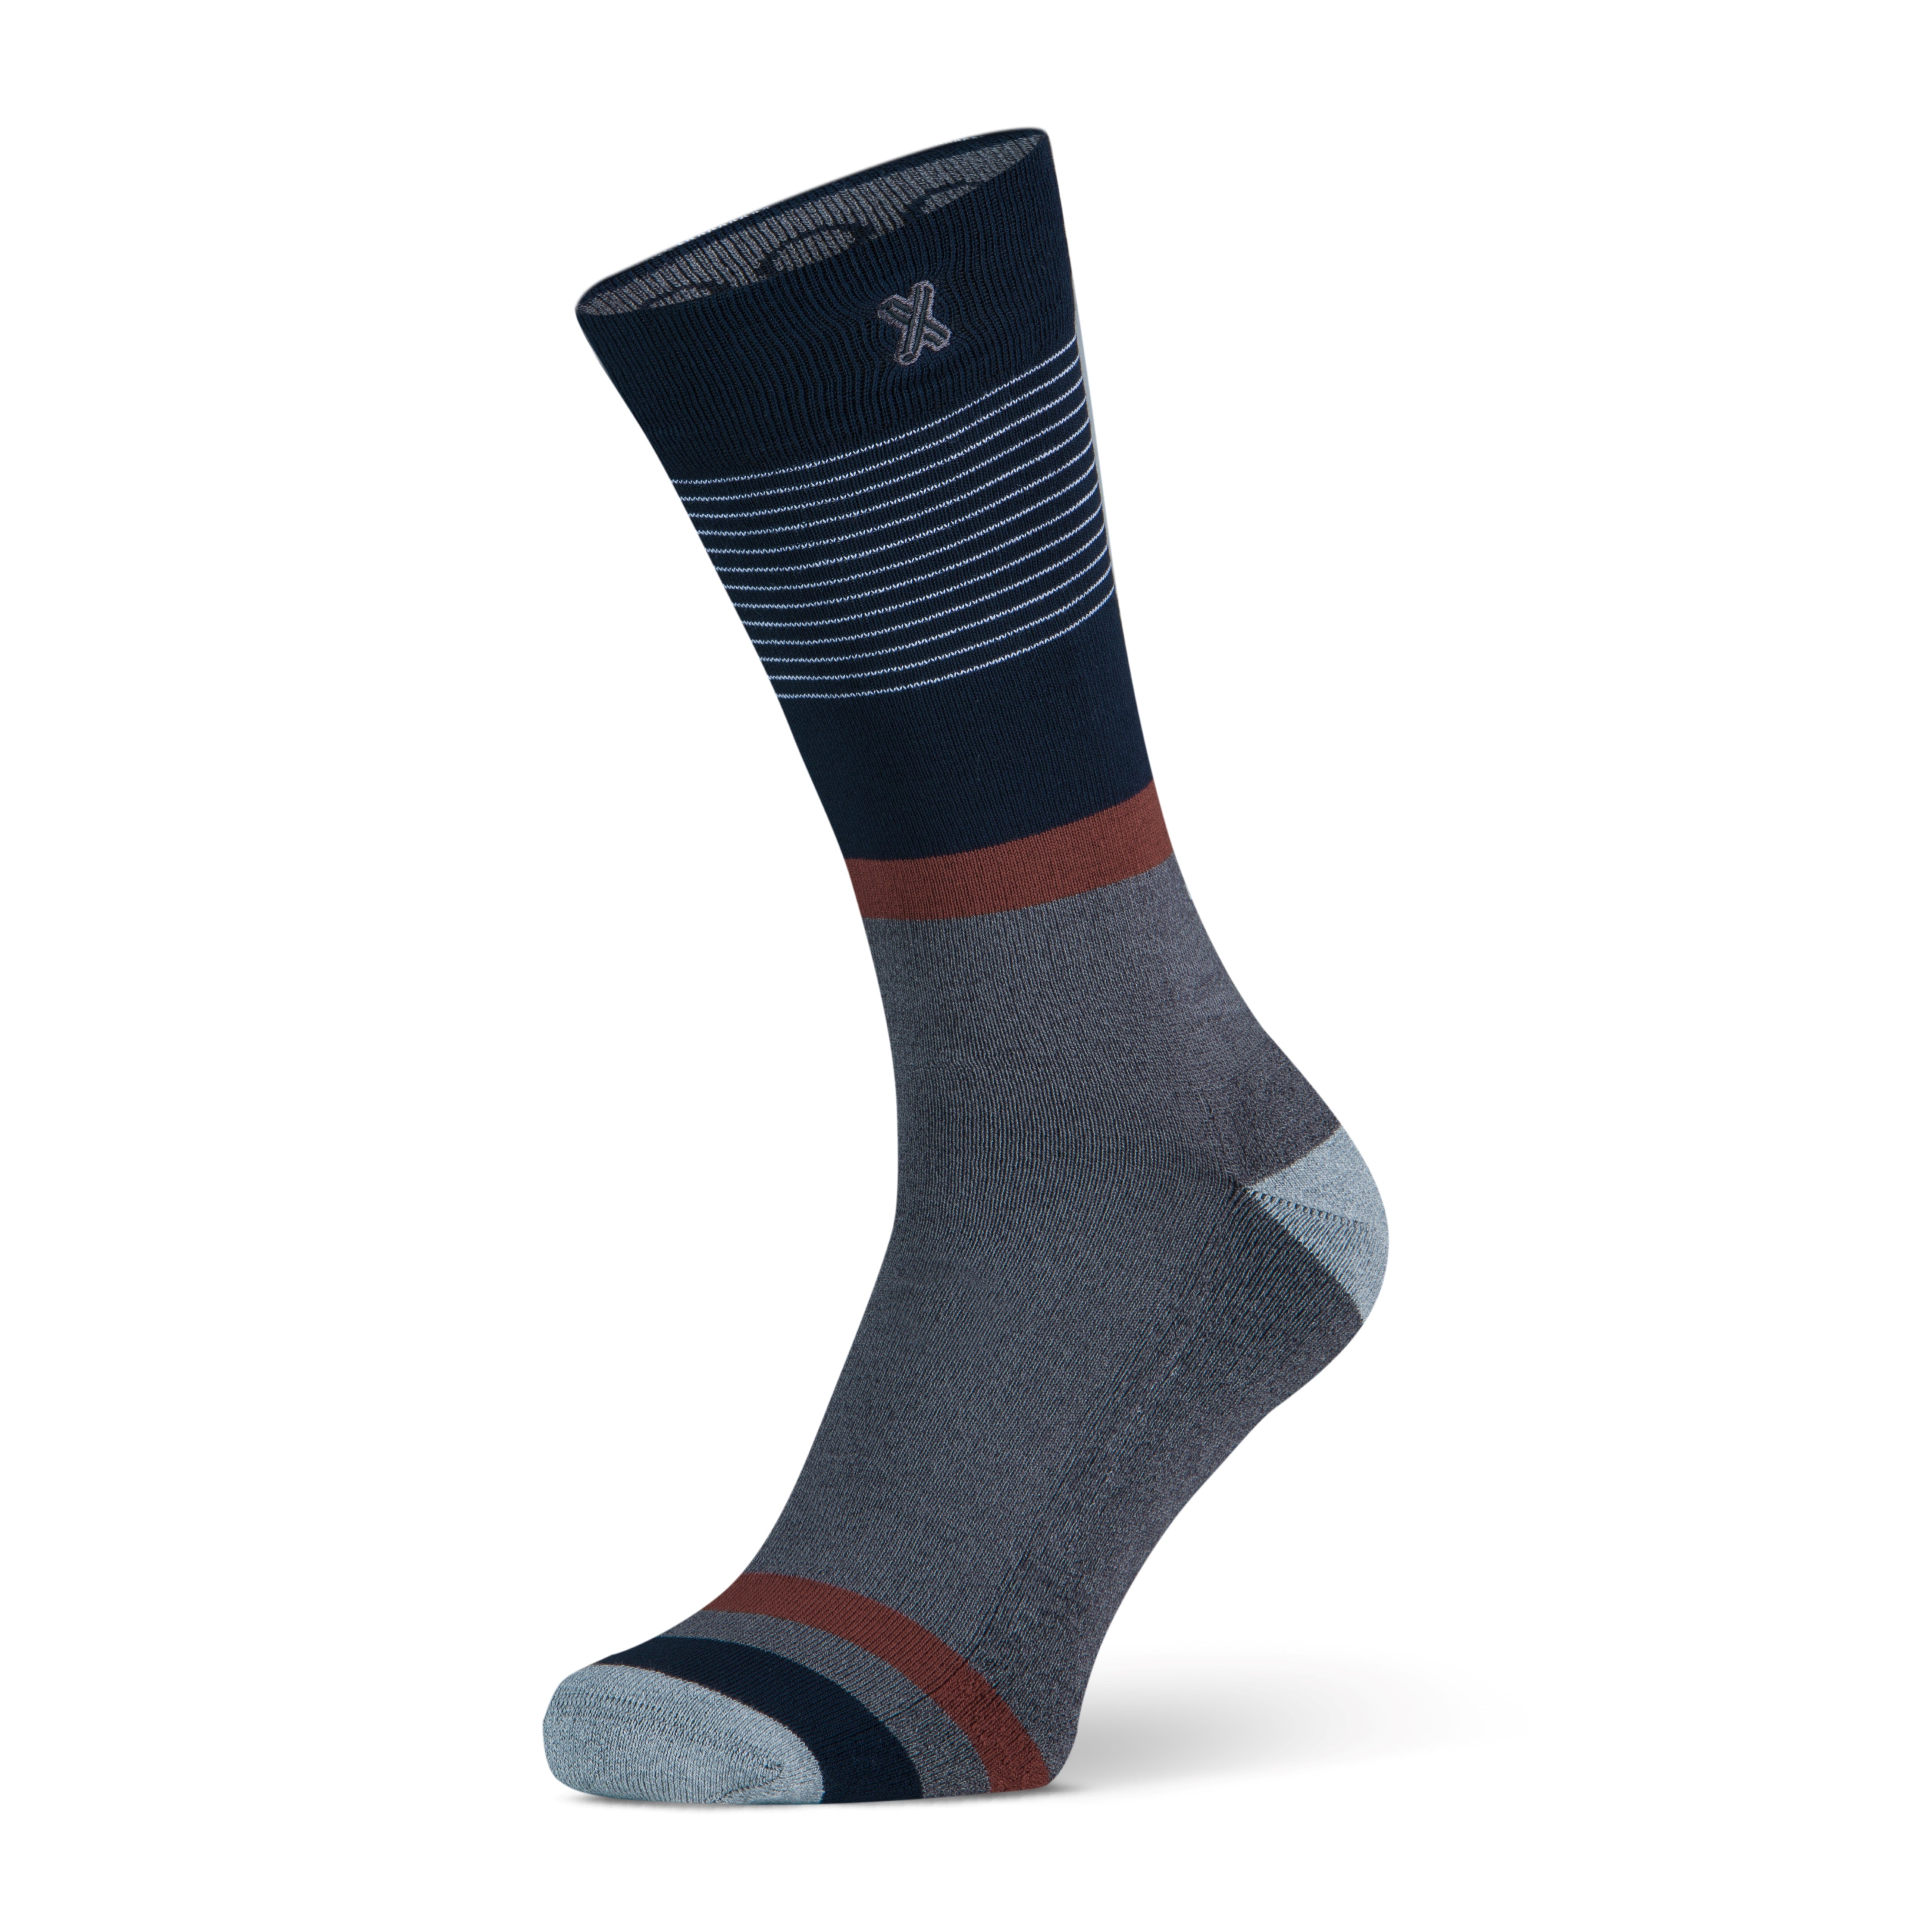 Hong Kong men's socks Grey